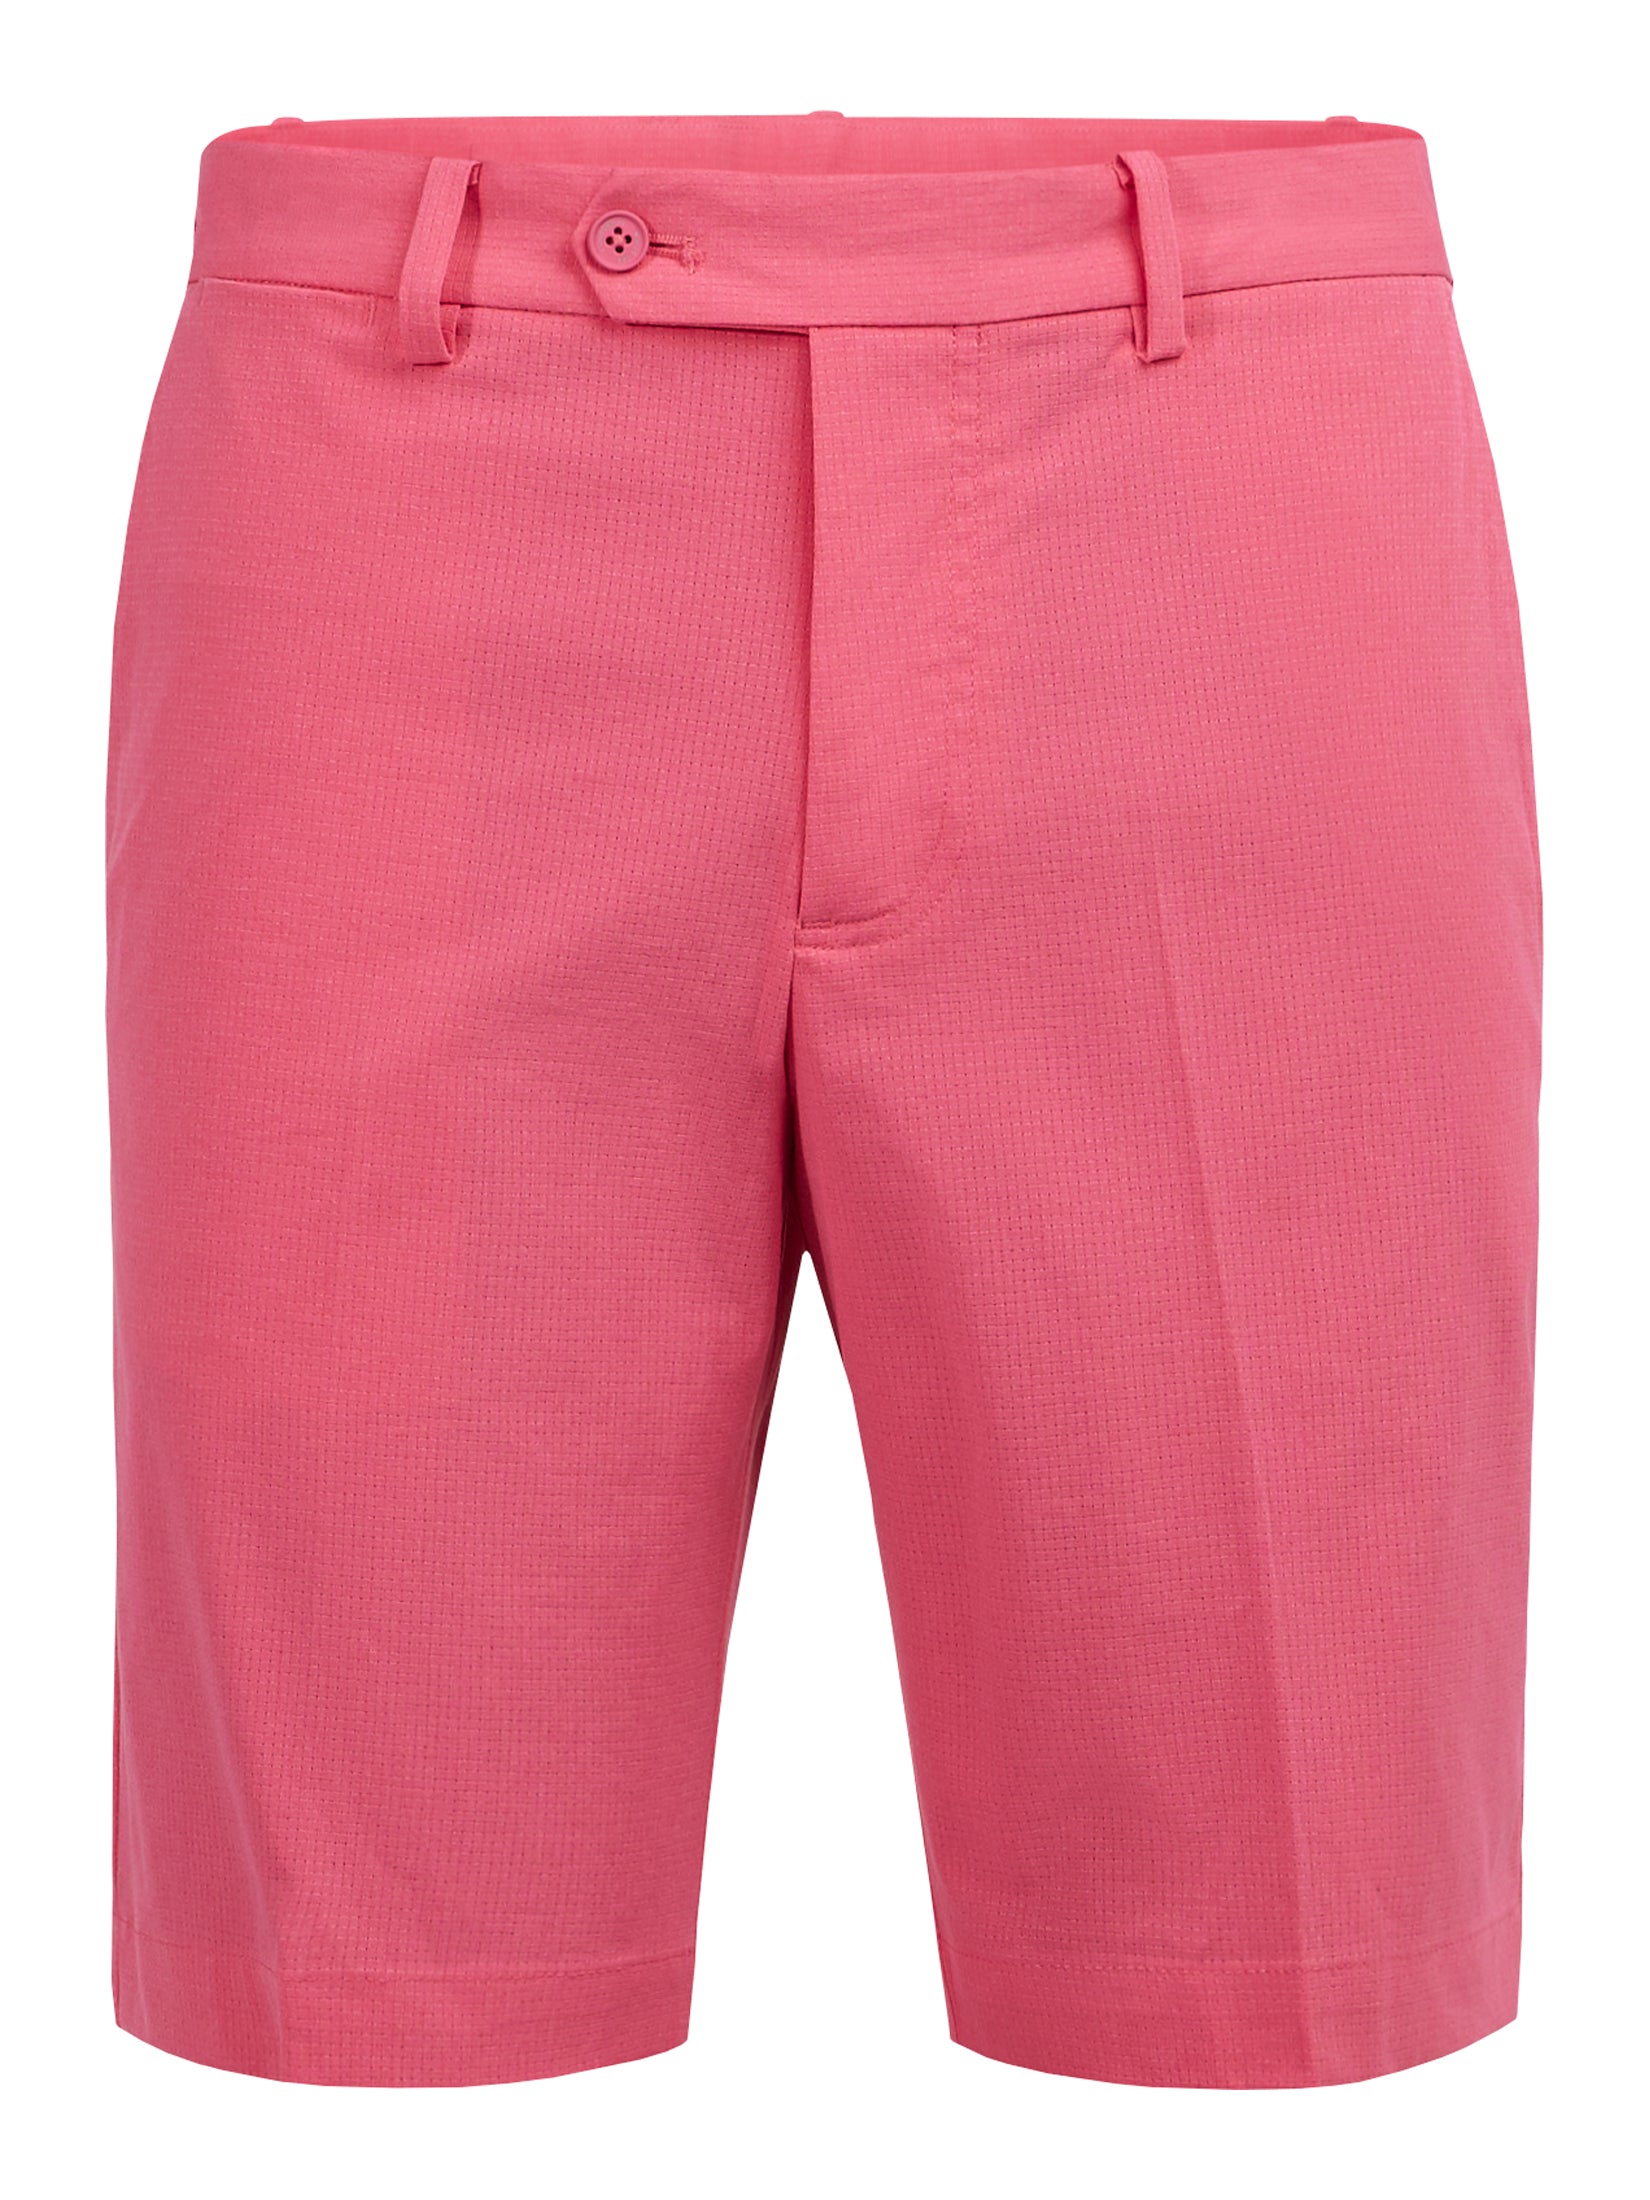 Vent Golf Shorts Pink